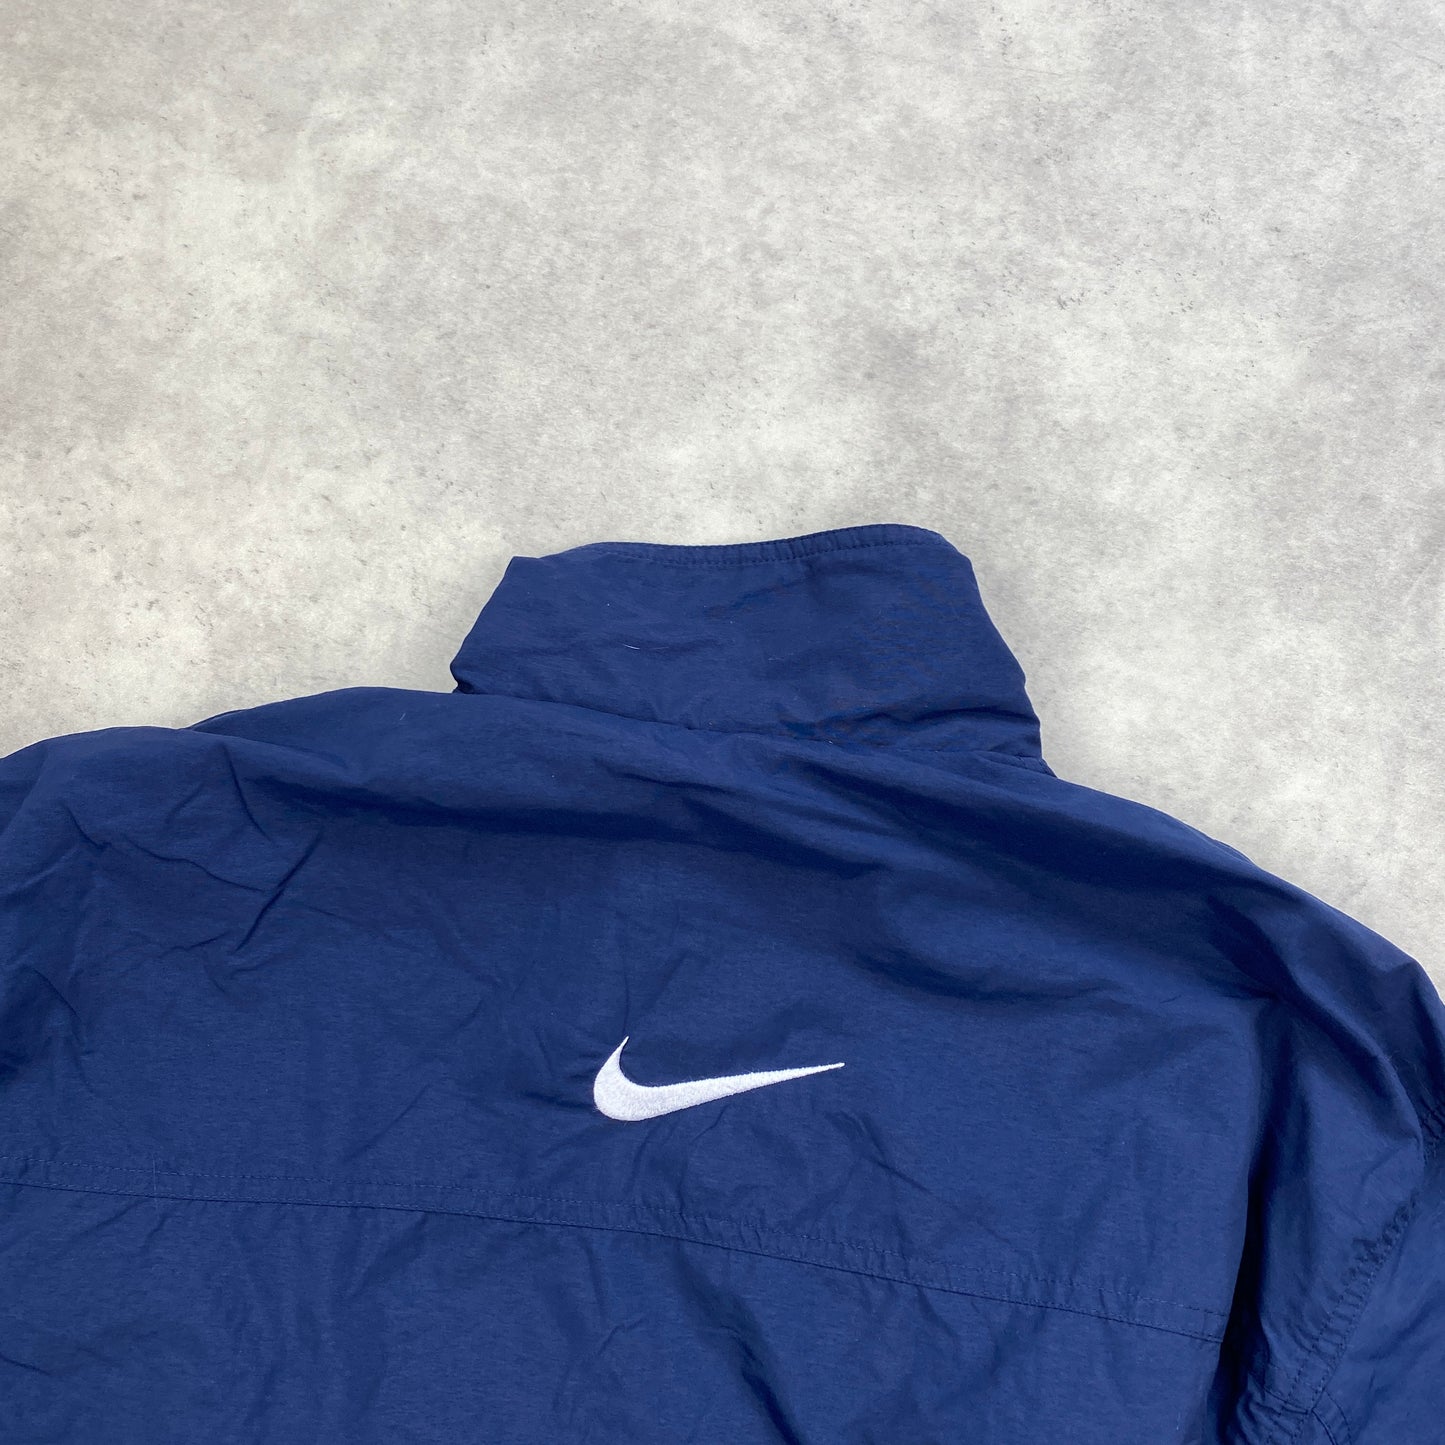 Nike track jacket (L)